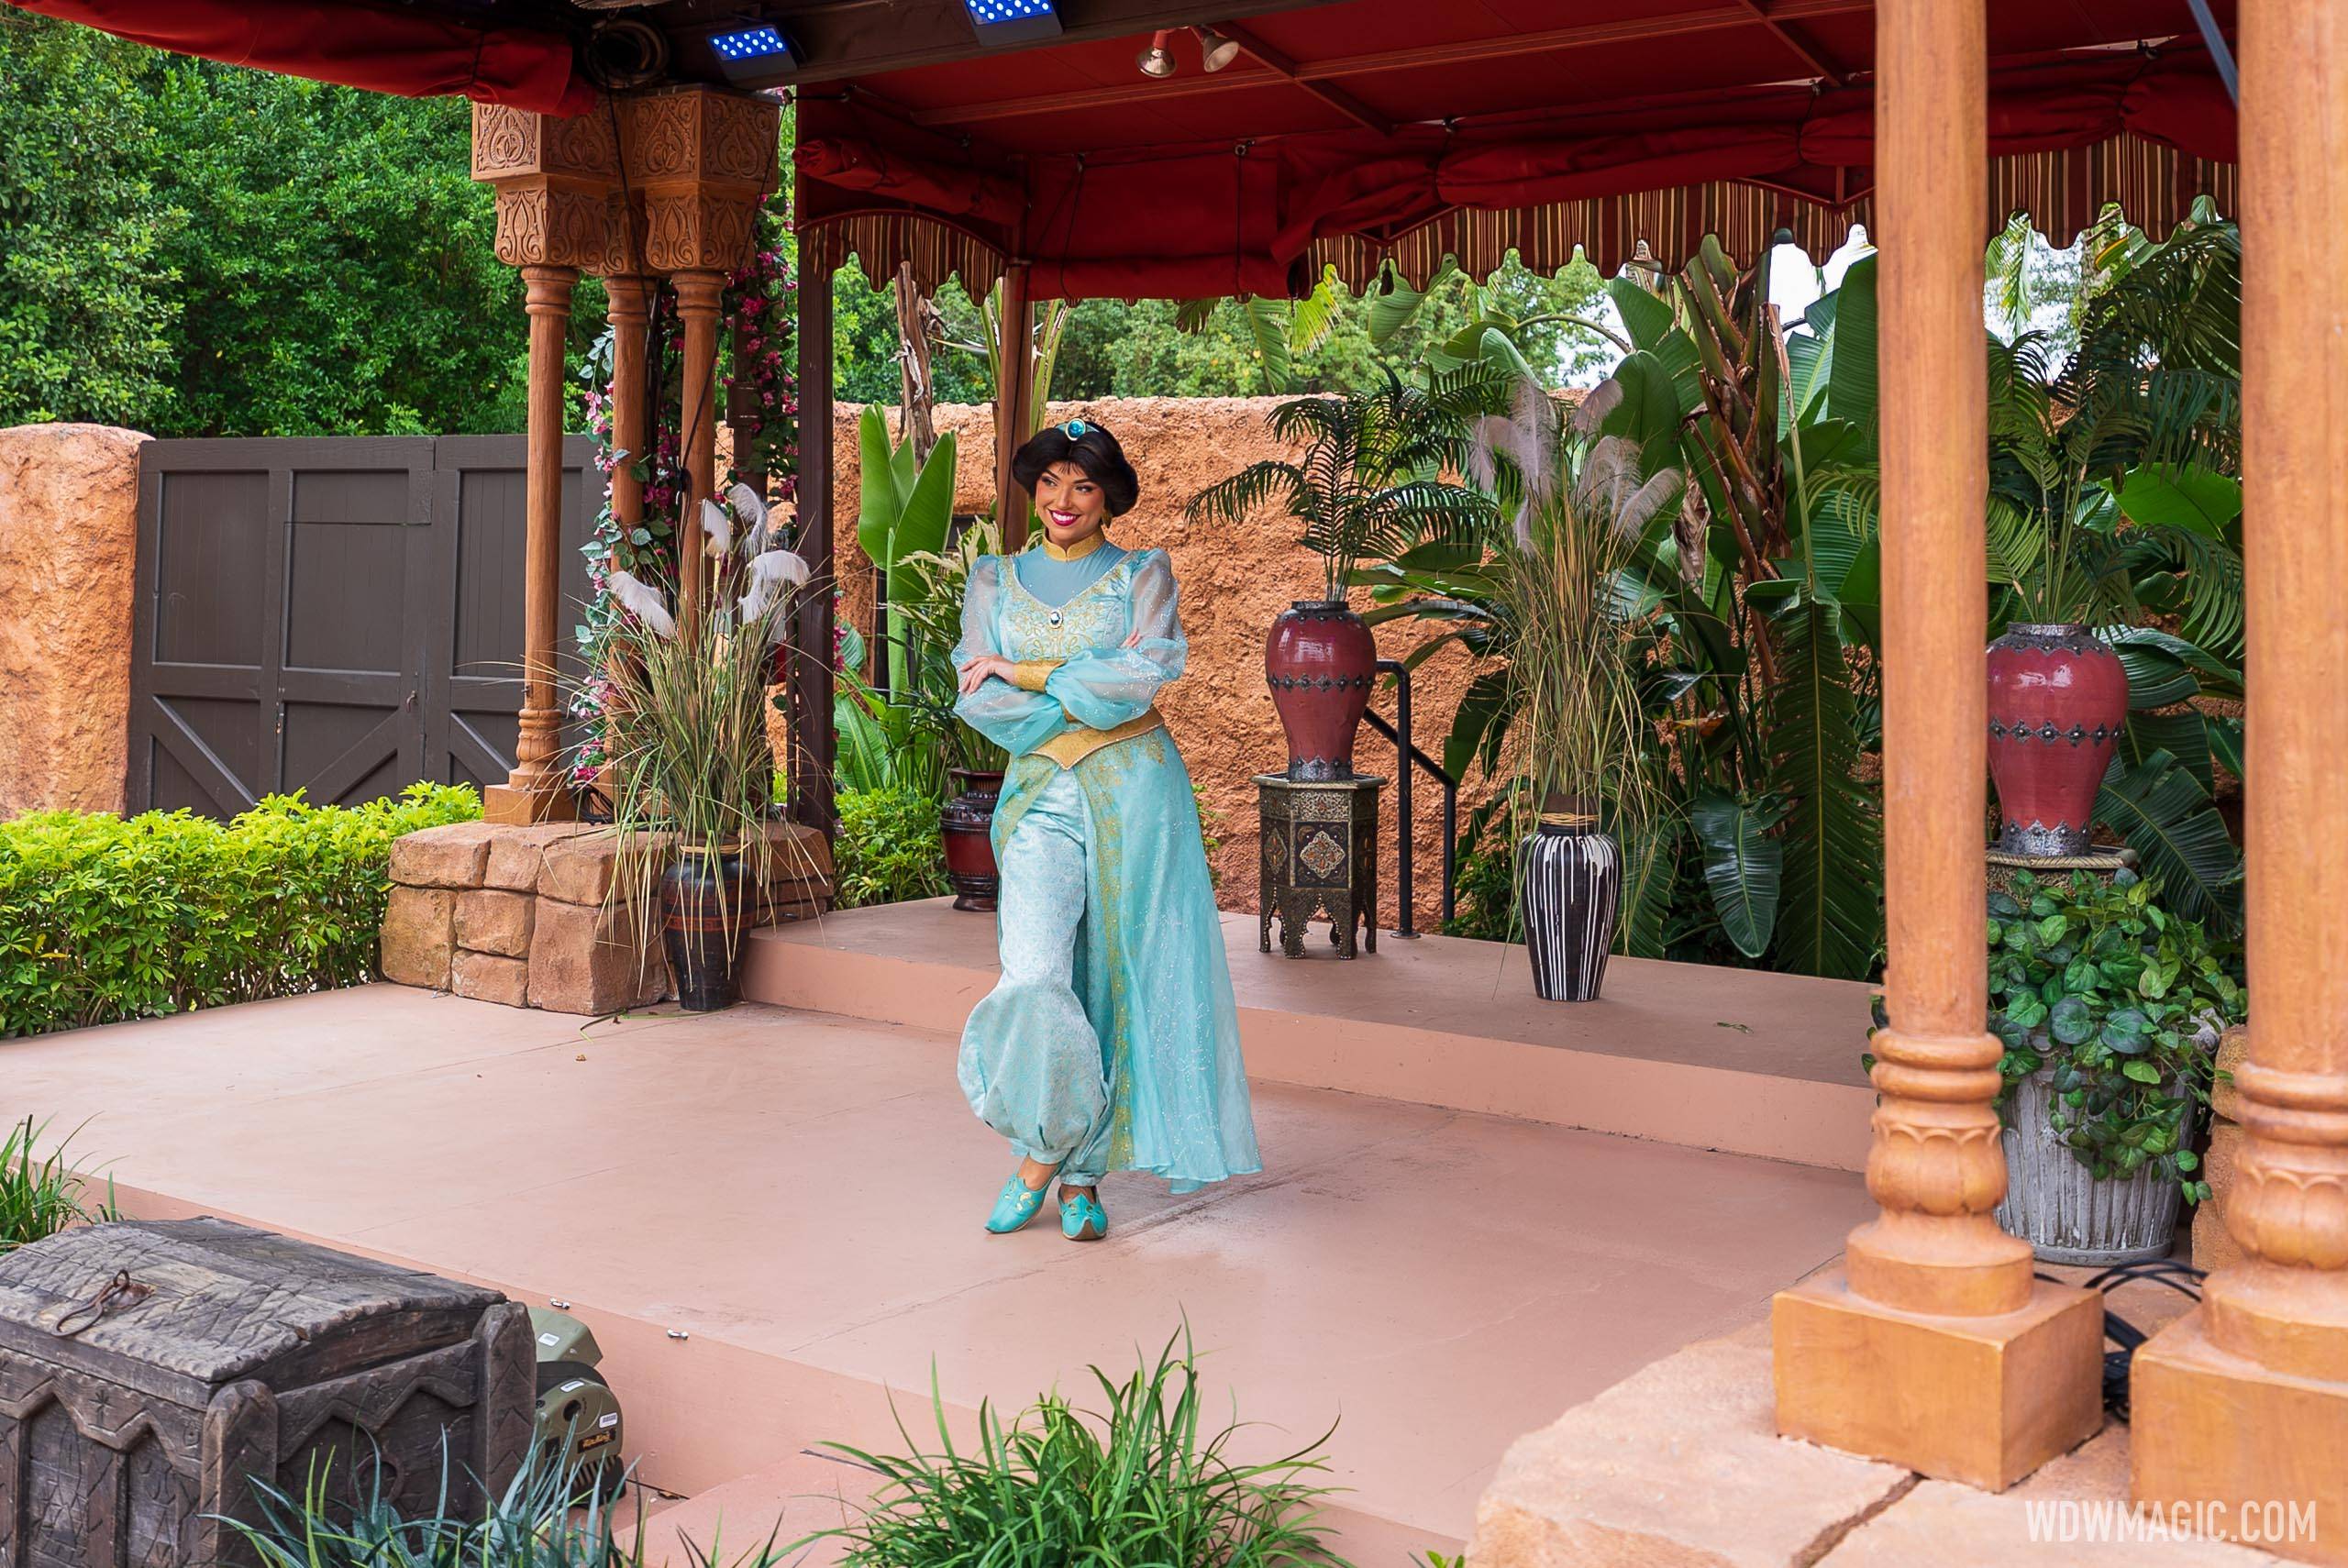 Princess Jasmine at the Morocco Pavilion